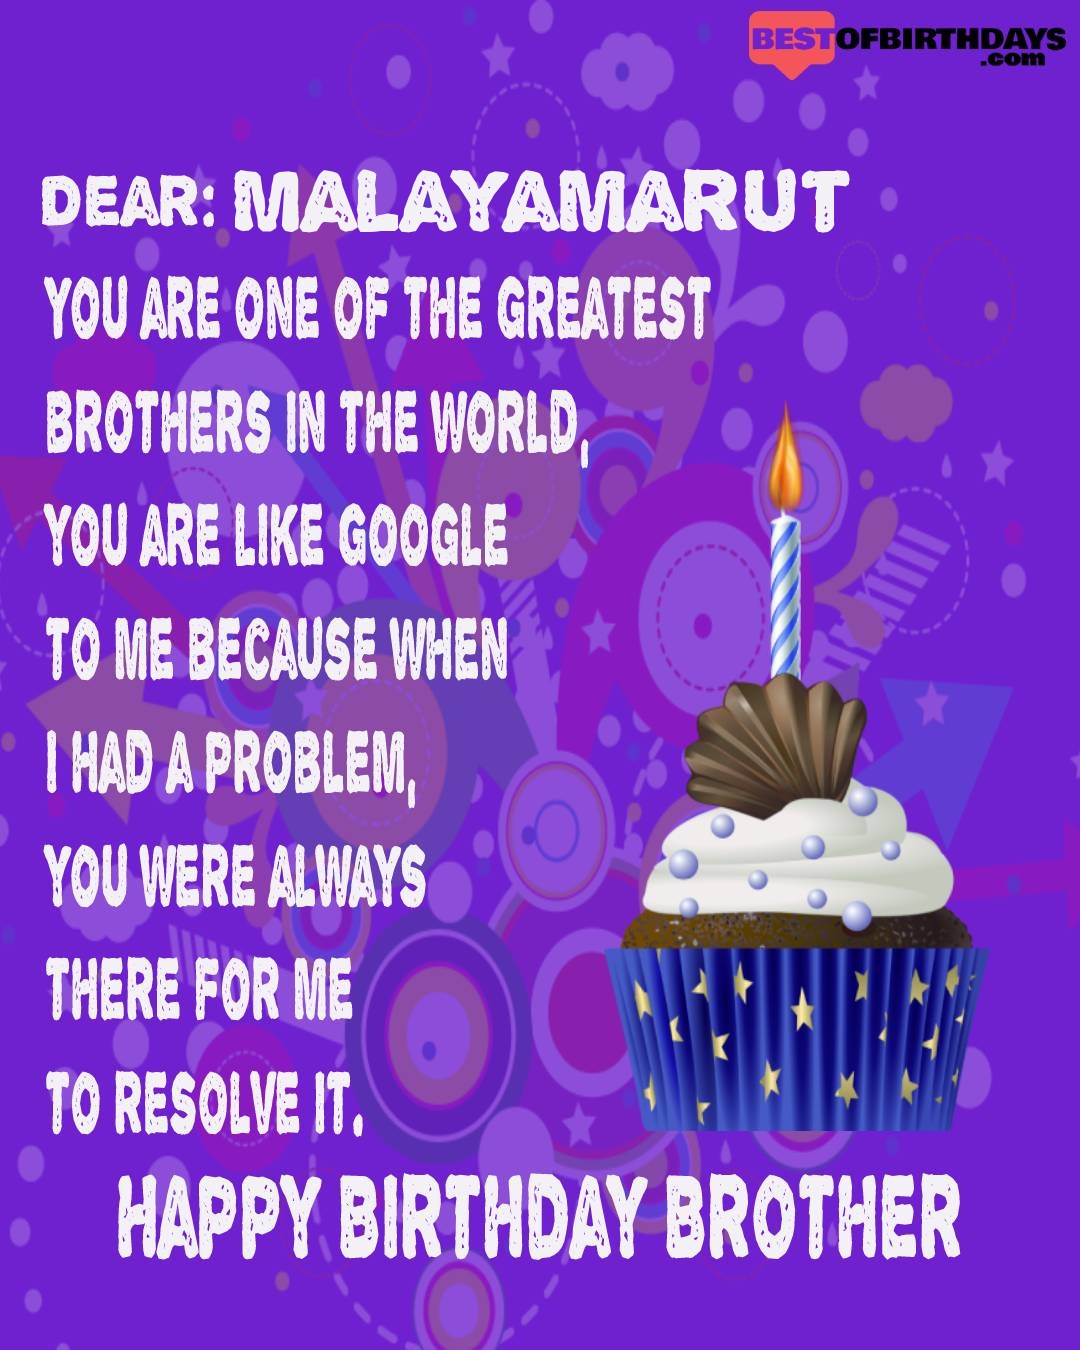 Happy birthday malayamarut bhai brother bro